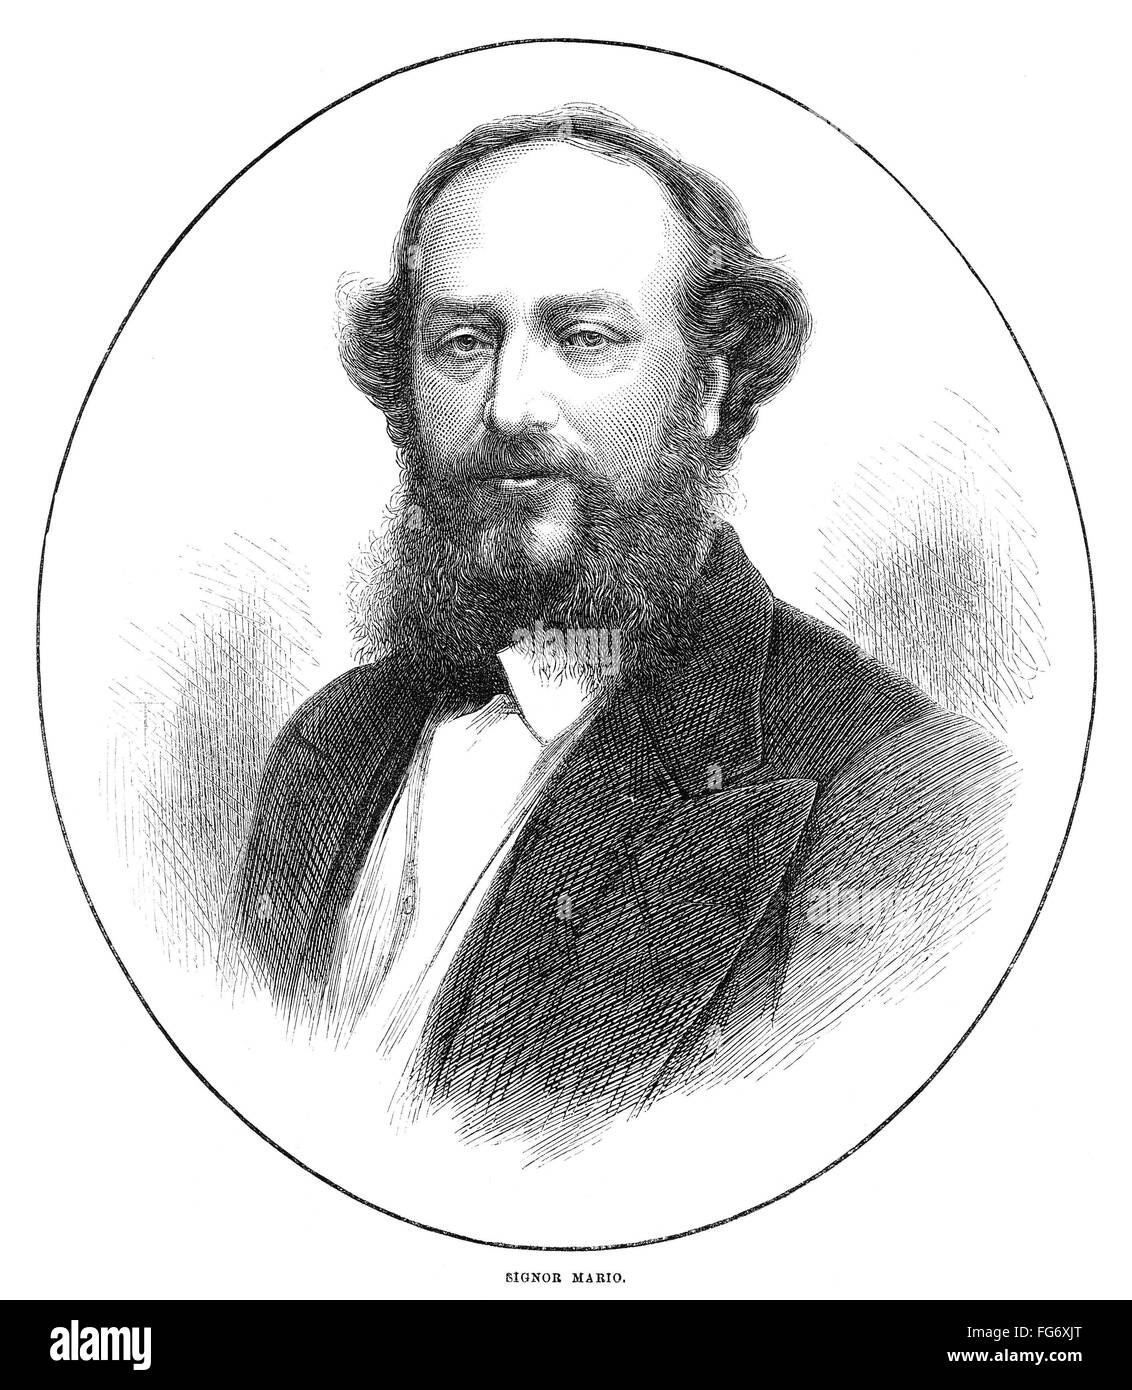 GIOVANNI MATTEO DE CANDIA /n(1810-1883). Known as Signor Mario. Italian tenor. Engraving, English, 1871. Stock Photo